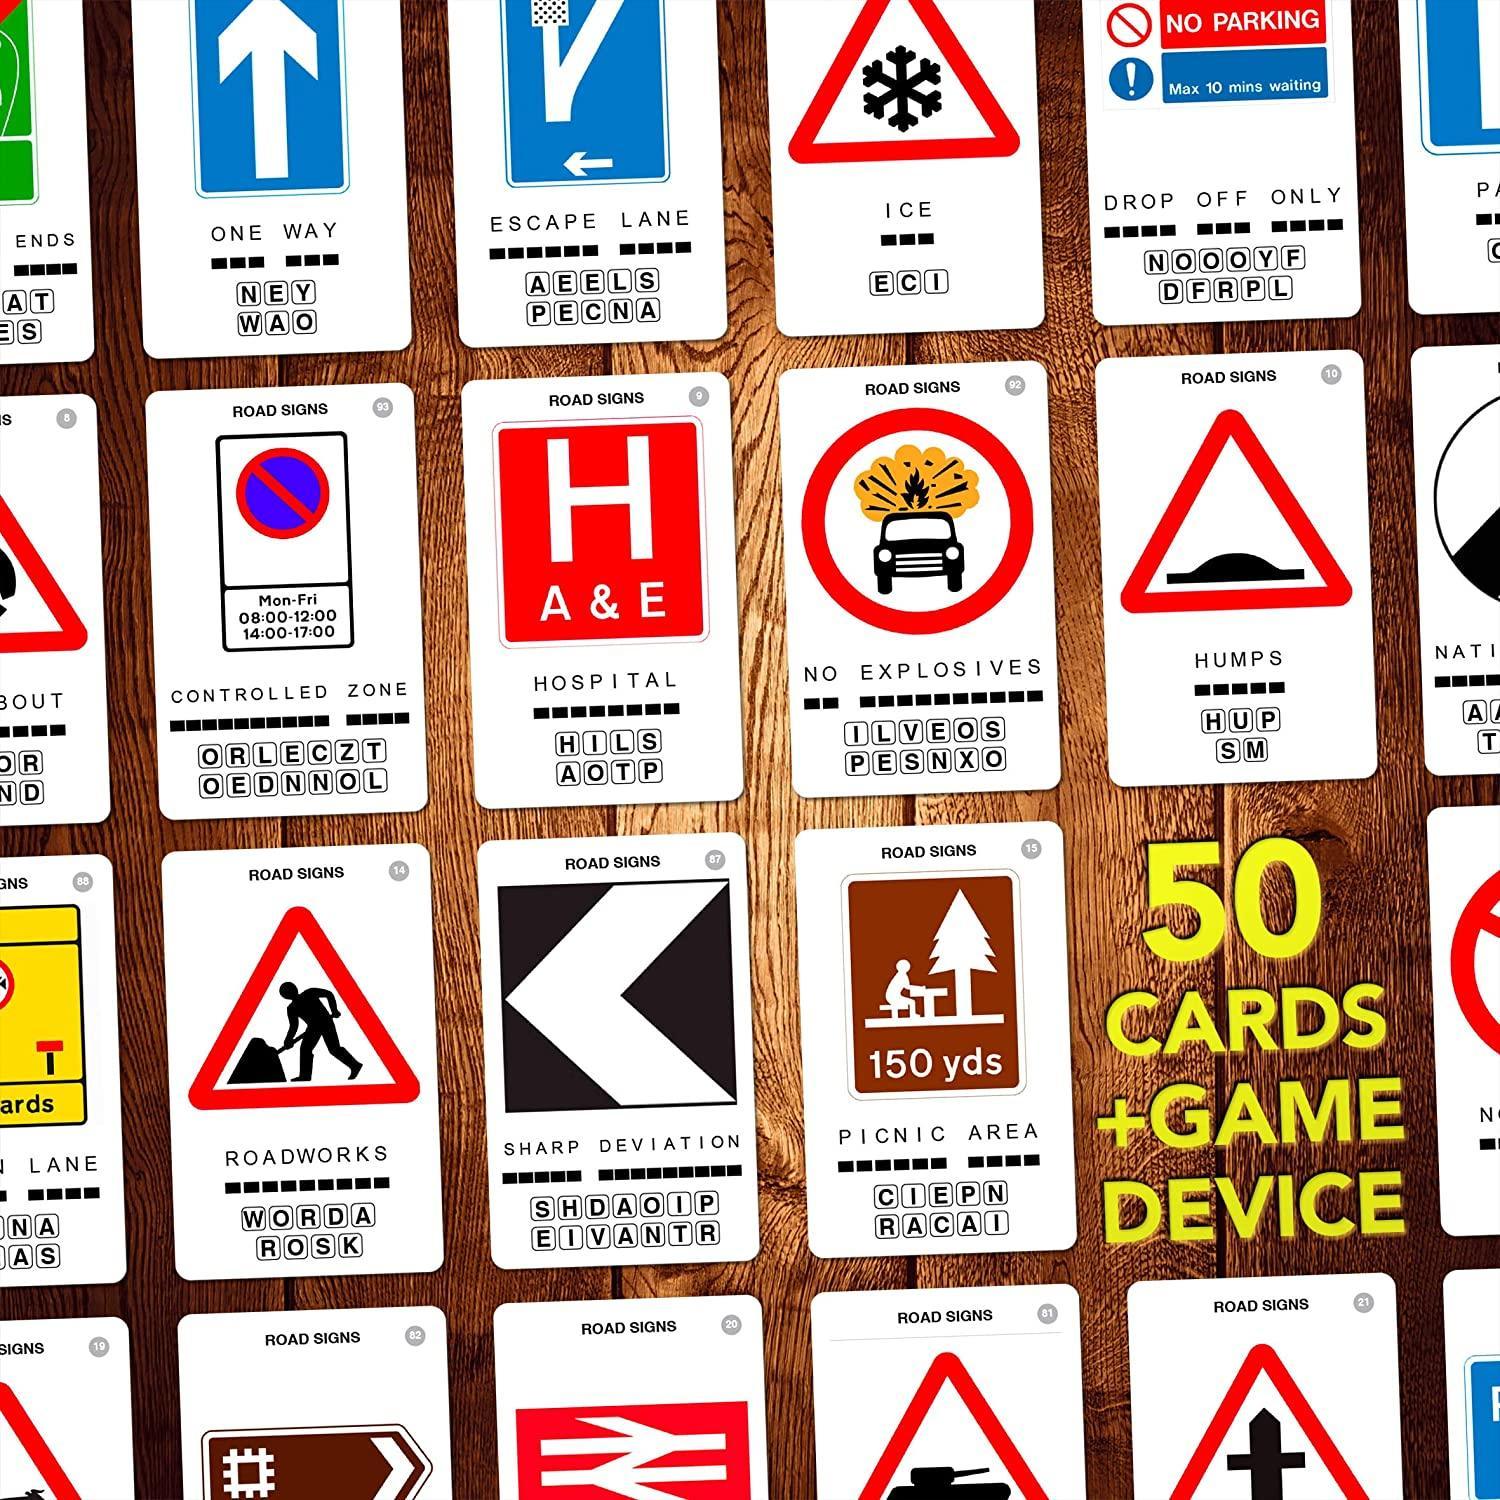 100 PICS - Road Signs UK - The Card Vault